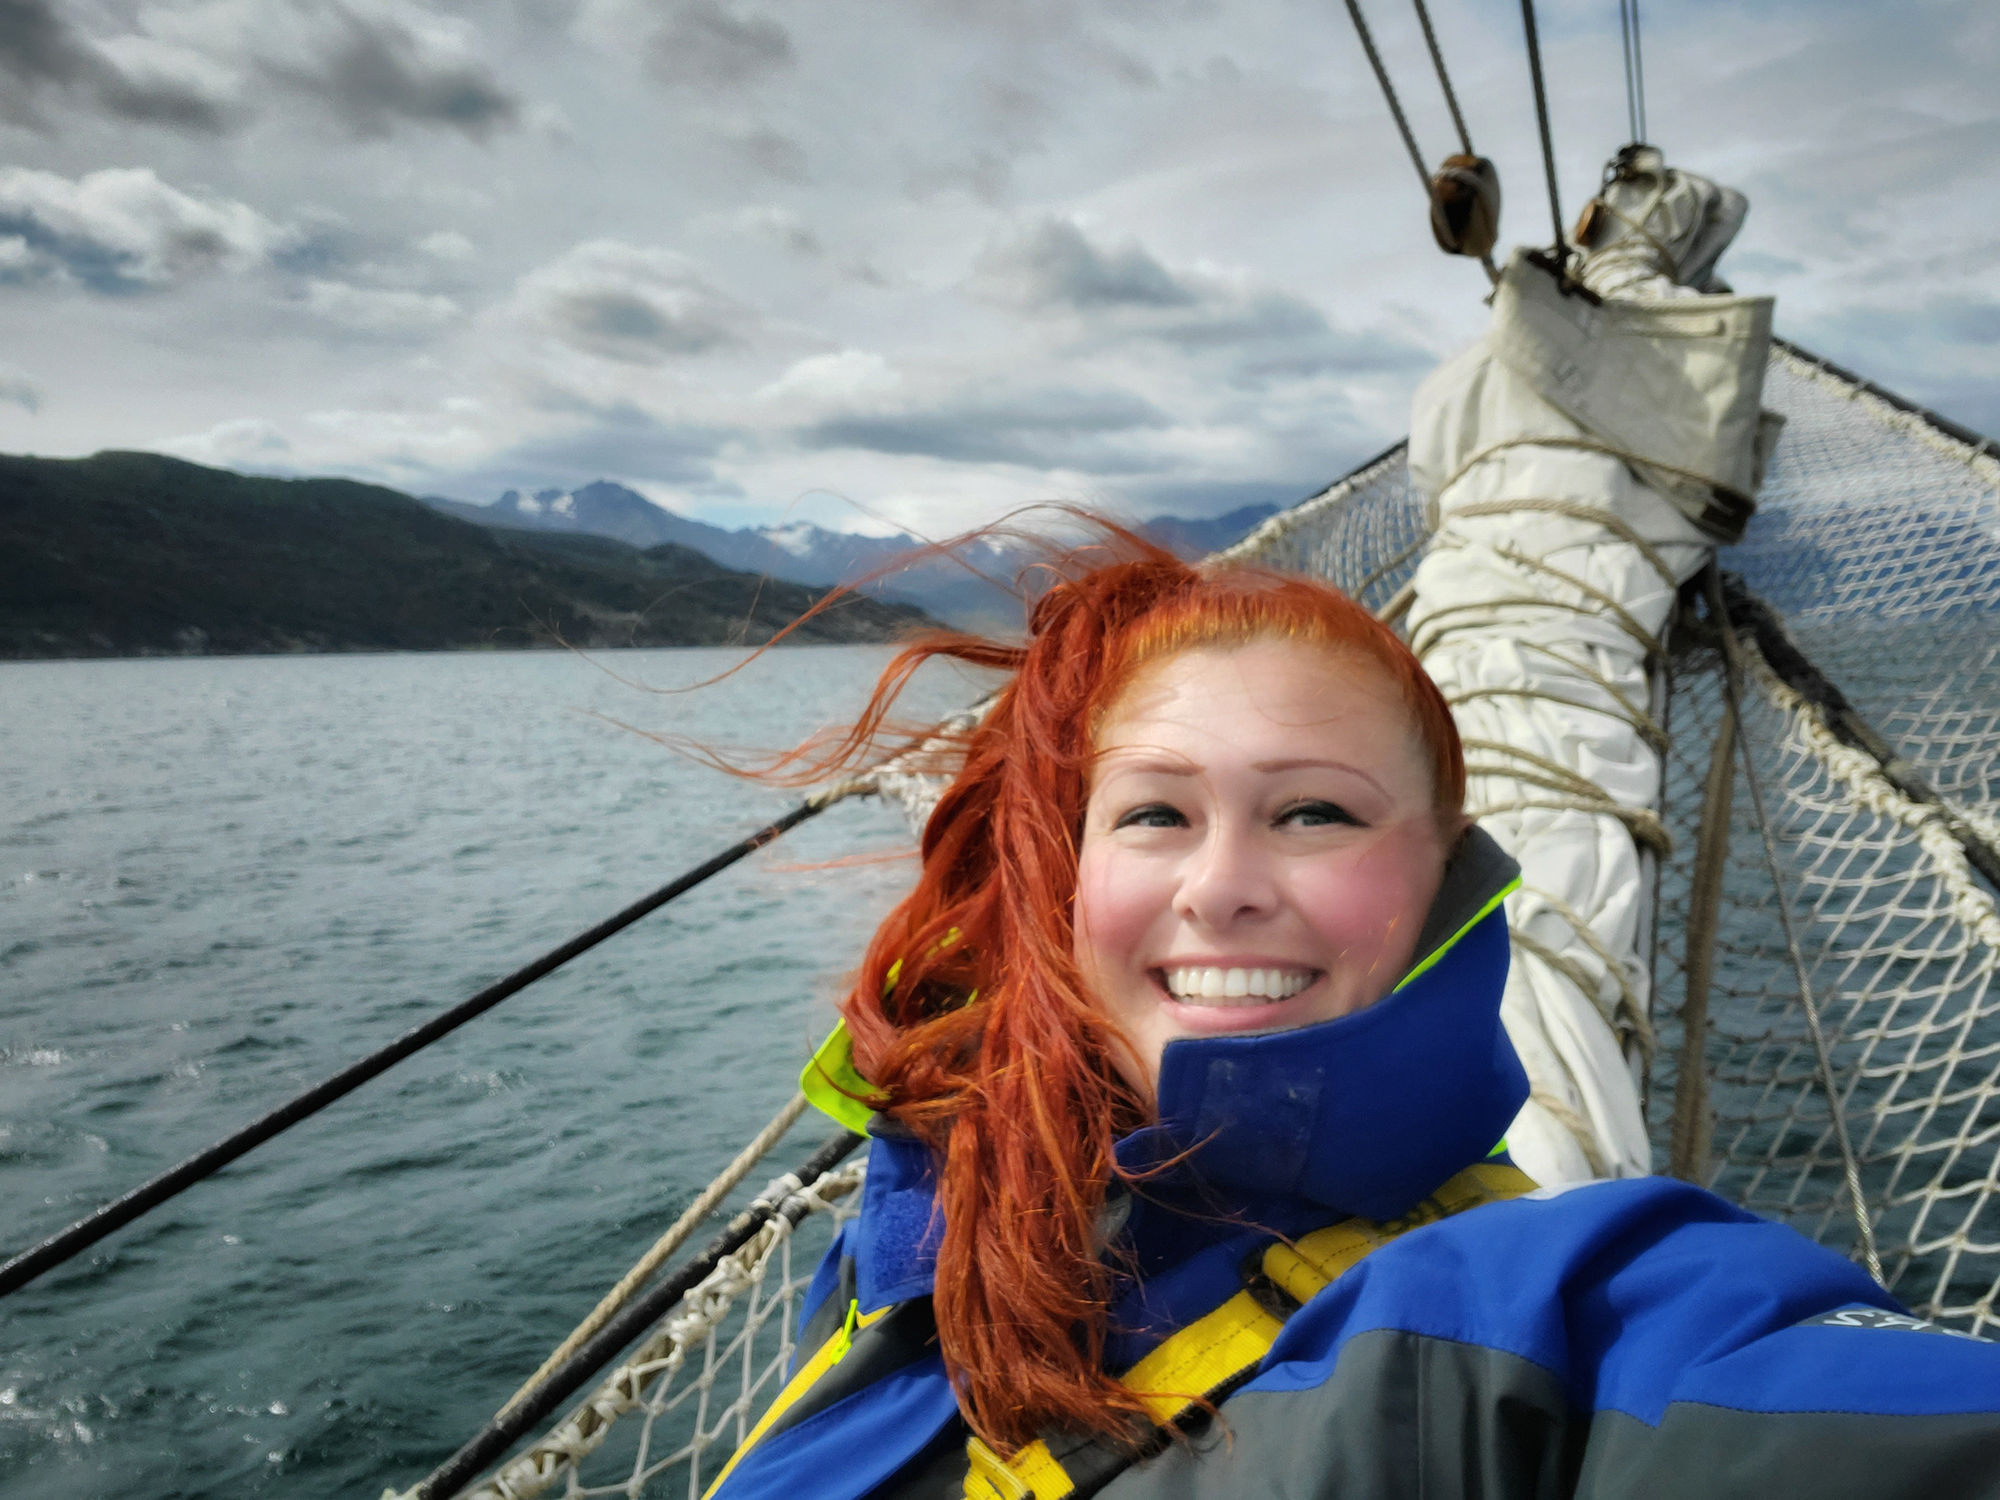 Scientist JJ Hastings takes a selfie on a boat in Antarctica 